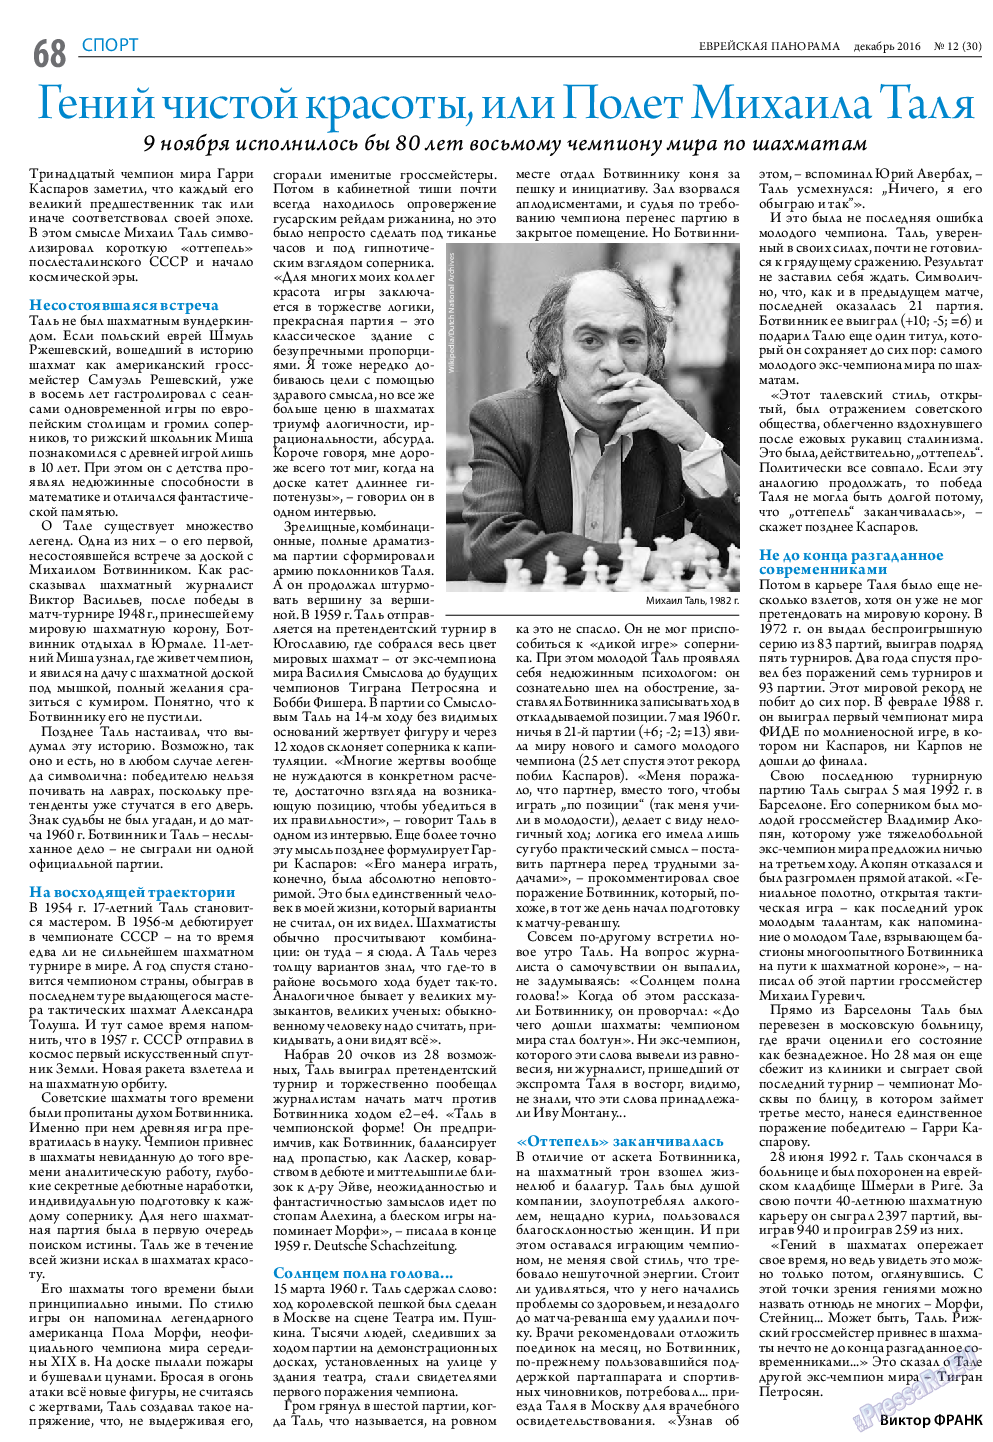 Еврейская панорама, газета. 2016 №12 стр.68